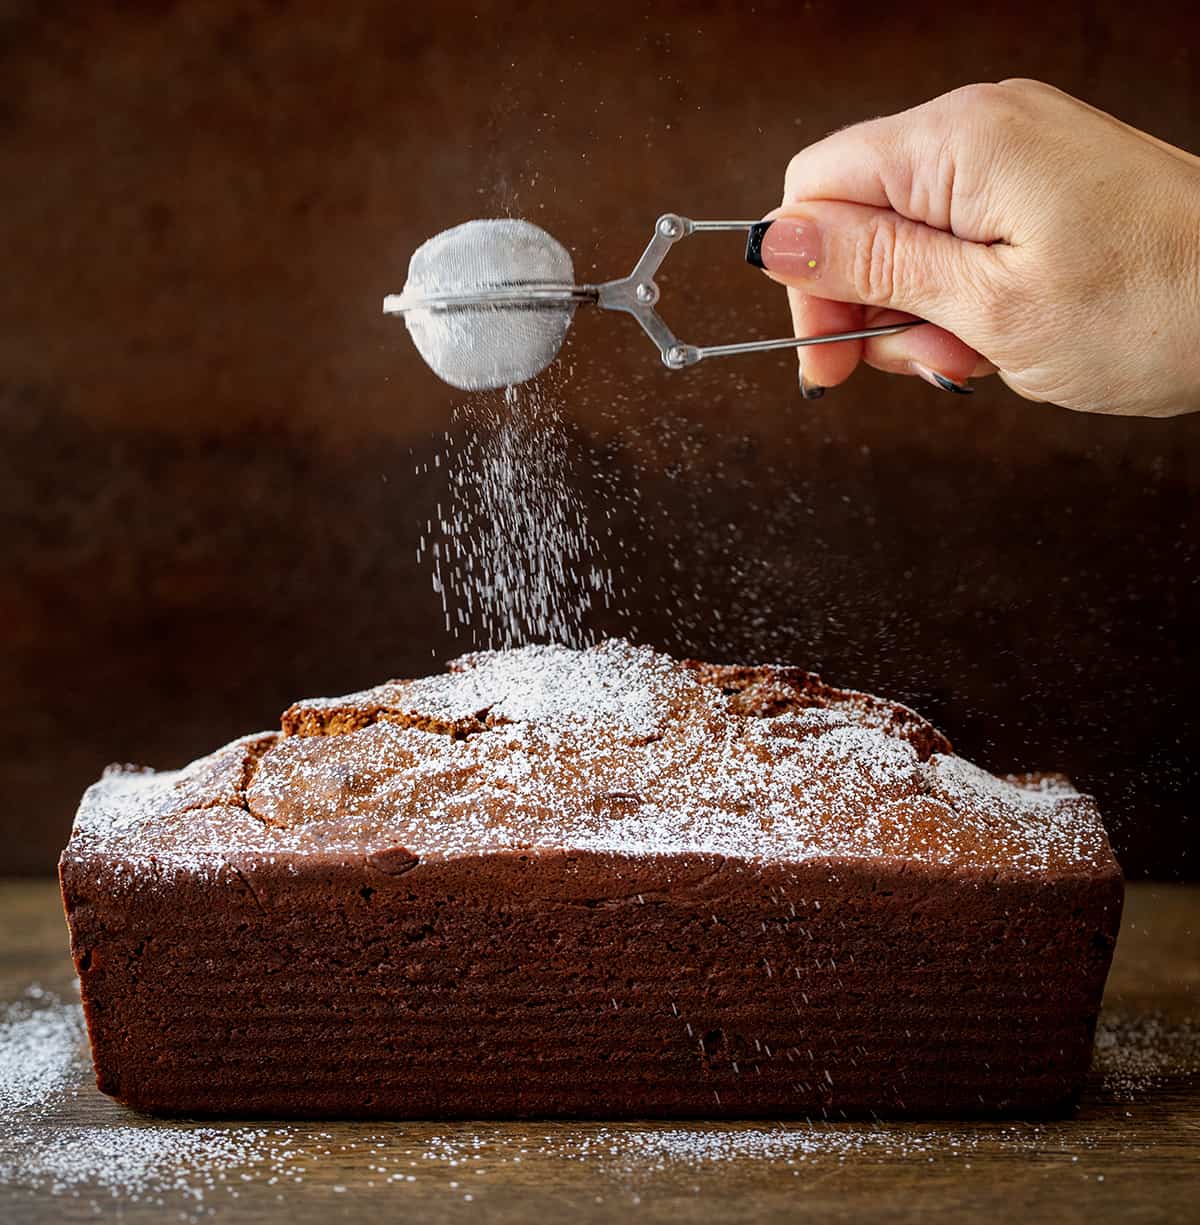 Sprinkling Confectioners Sugar over Gingerbread Loaf on a Dark Table.